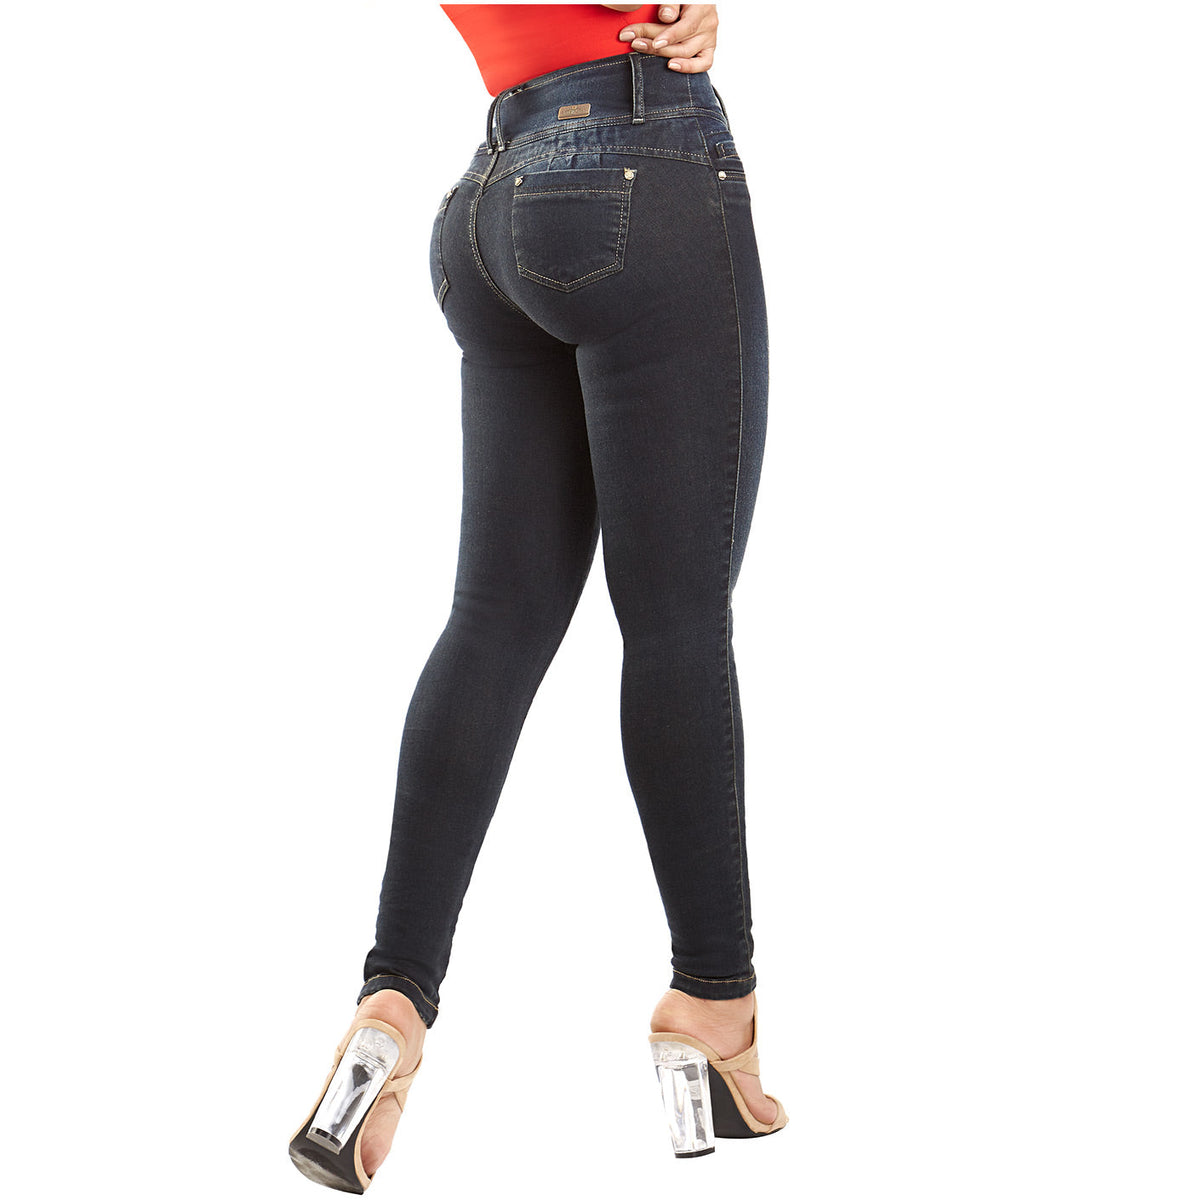 LT.Rose CS3B04 | Colombian Mid-Rise Butt Lifter Skinny Jeans For Women